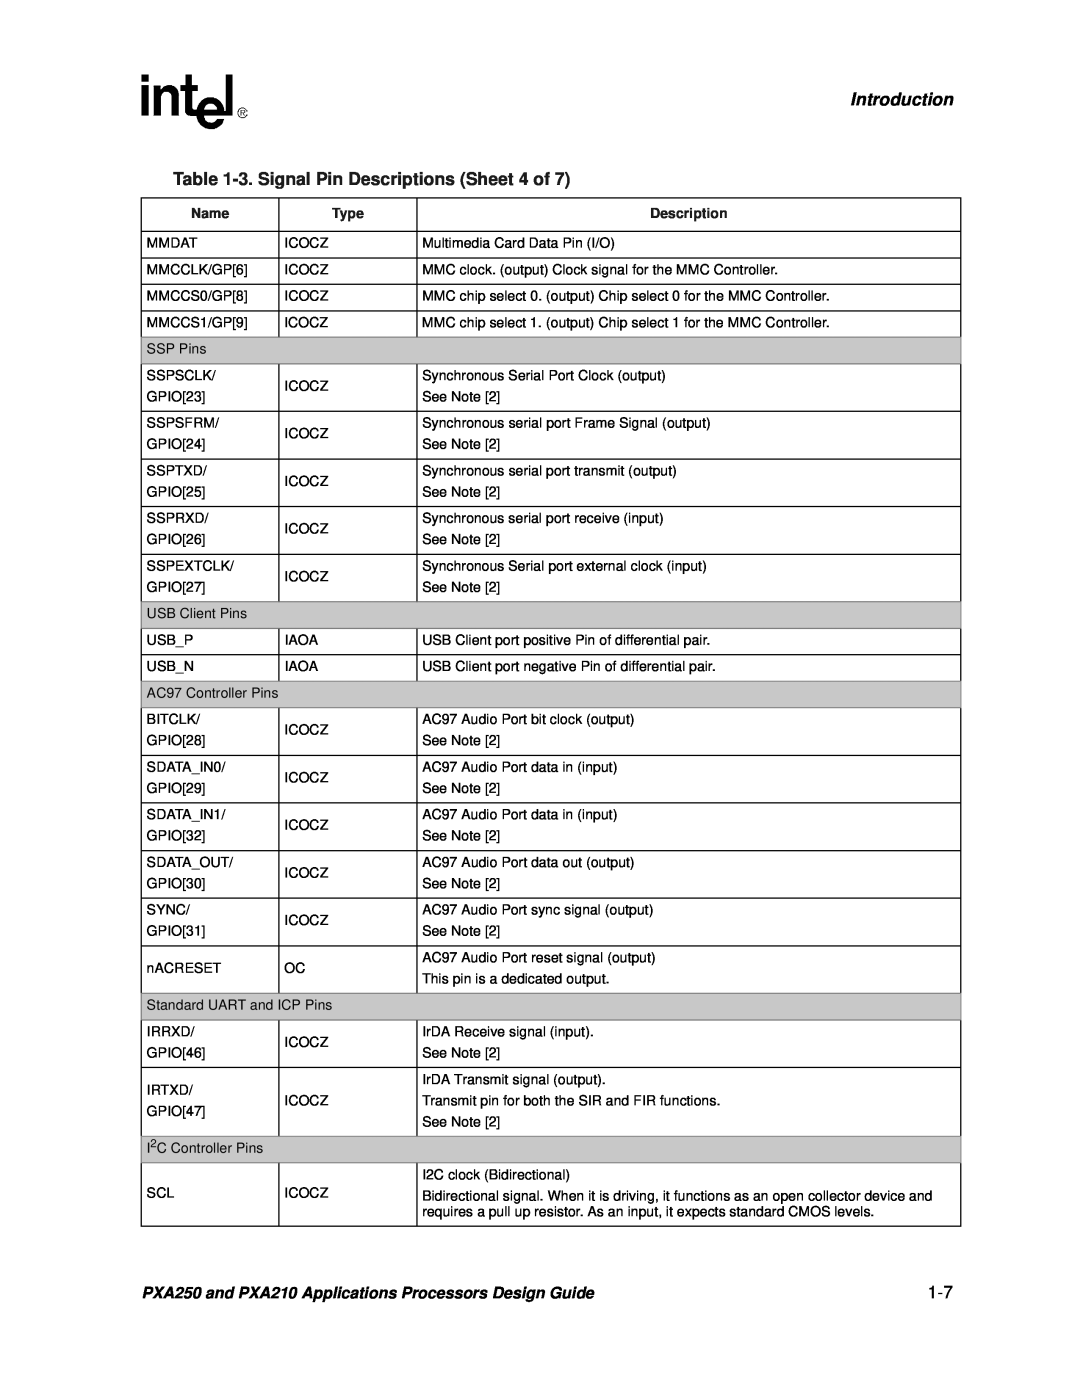 Intel PXA250 and PXA210 manual Introduction, 3. Signal Pin Descriptions Sheet 4 of 